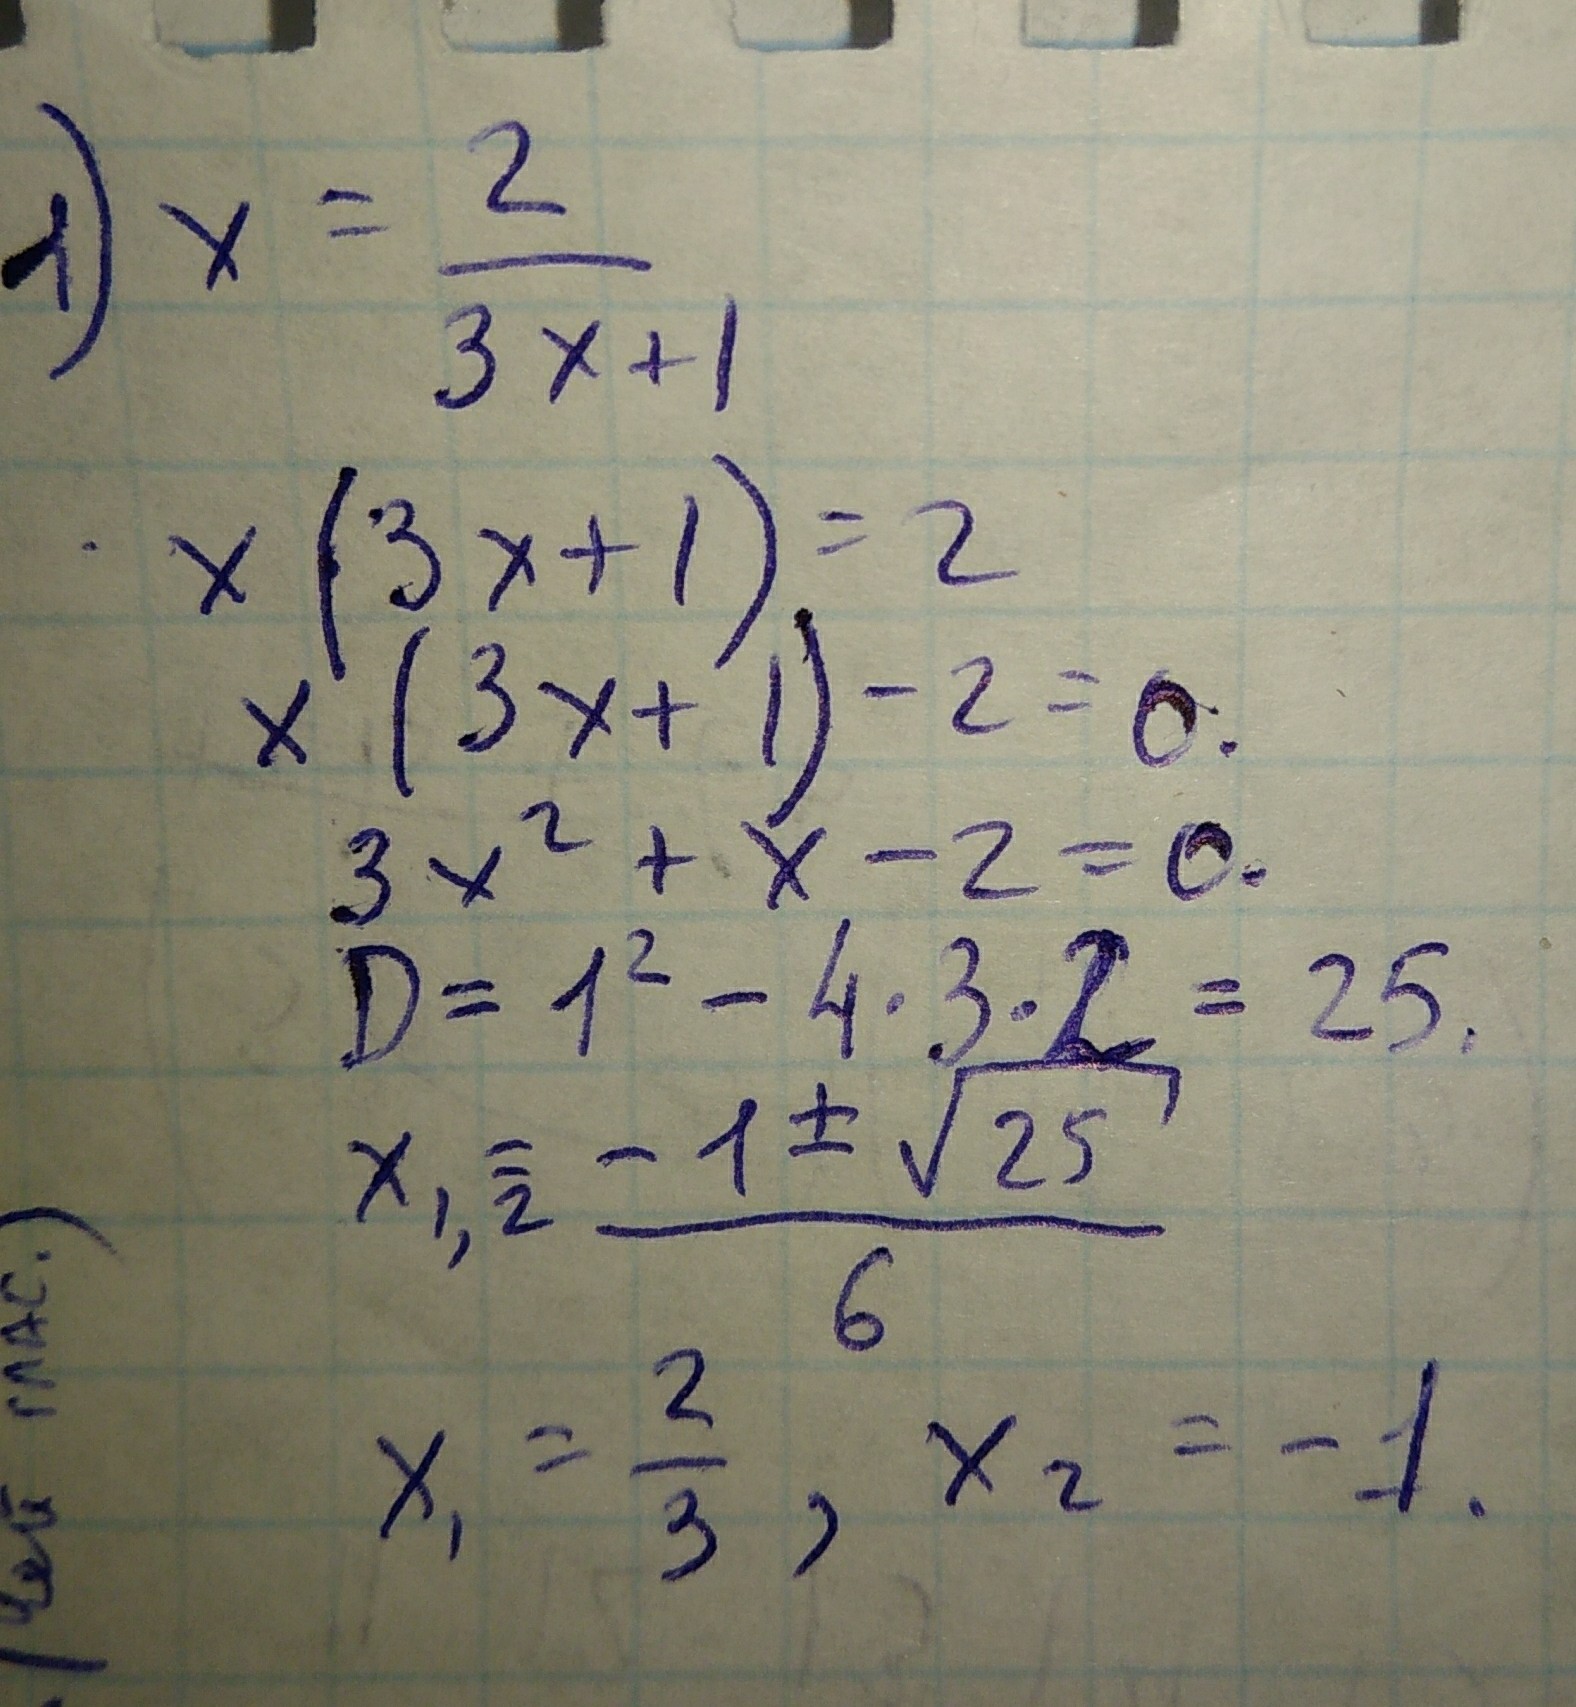 12 3x 9 4x решение. Решение 2(2x-1)-3(x-2)=6+4(3-2x). Y=-(X-1)^2+4(X-1)+5. (X-2)^3. (1/3)^4x-4×(1/3)^2-3x=1 решение.